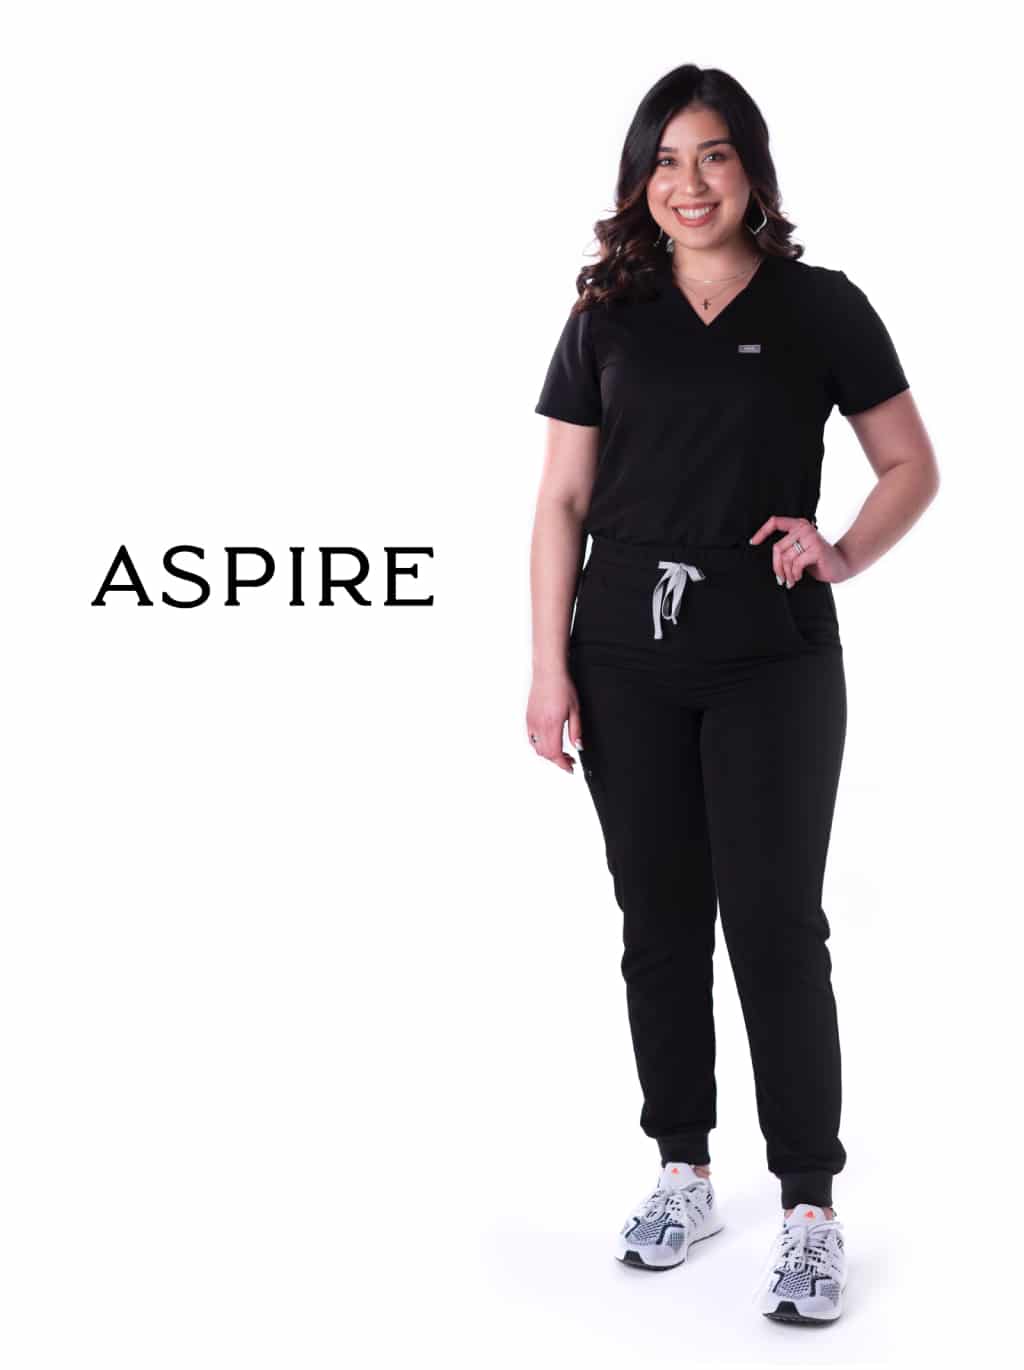 Arielle| Our Team | Aspire Aesthetics and Wellness